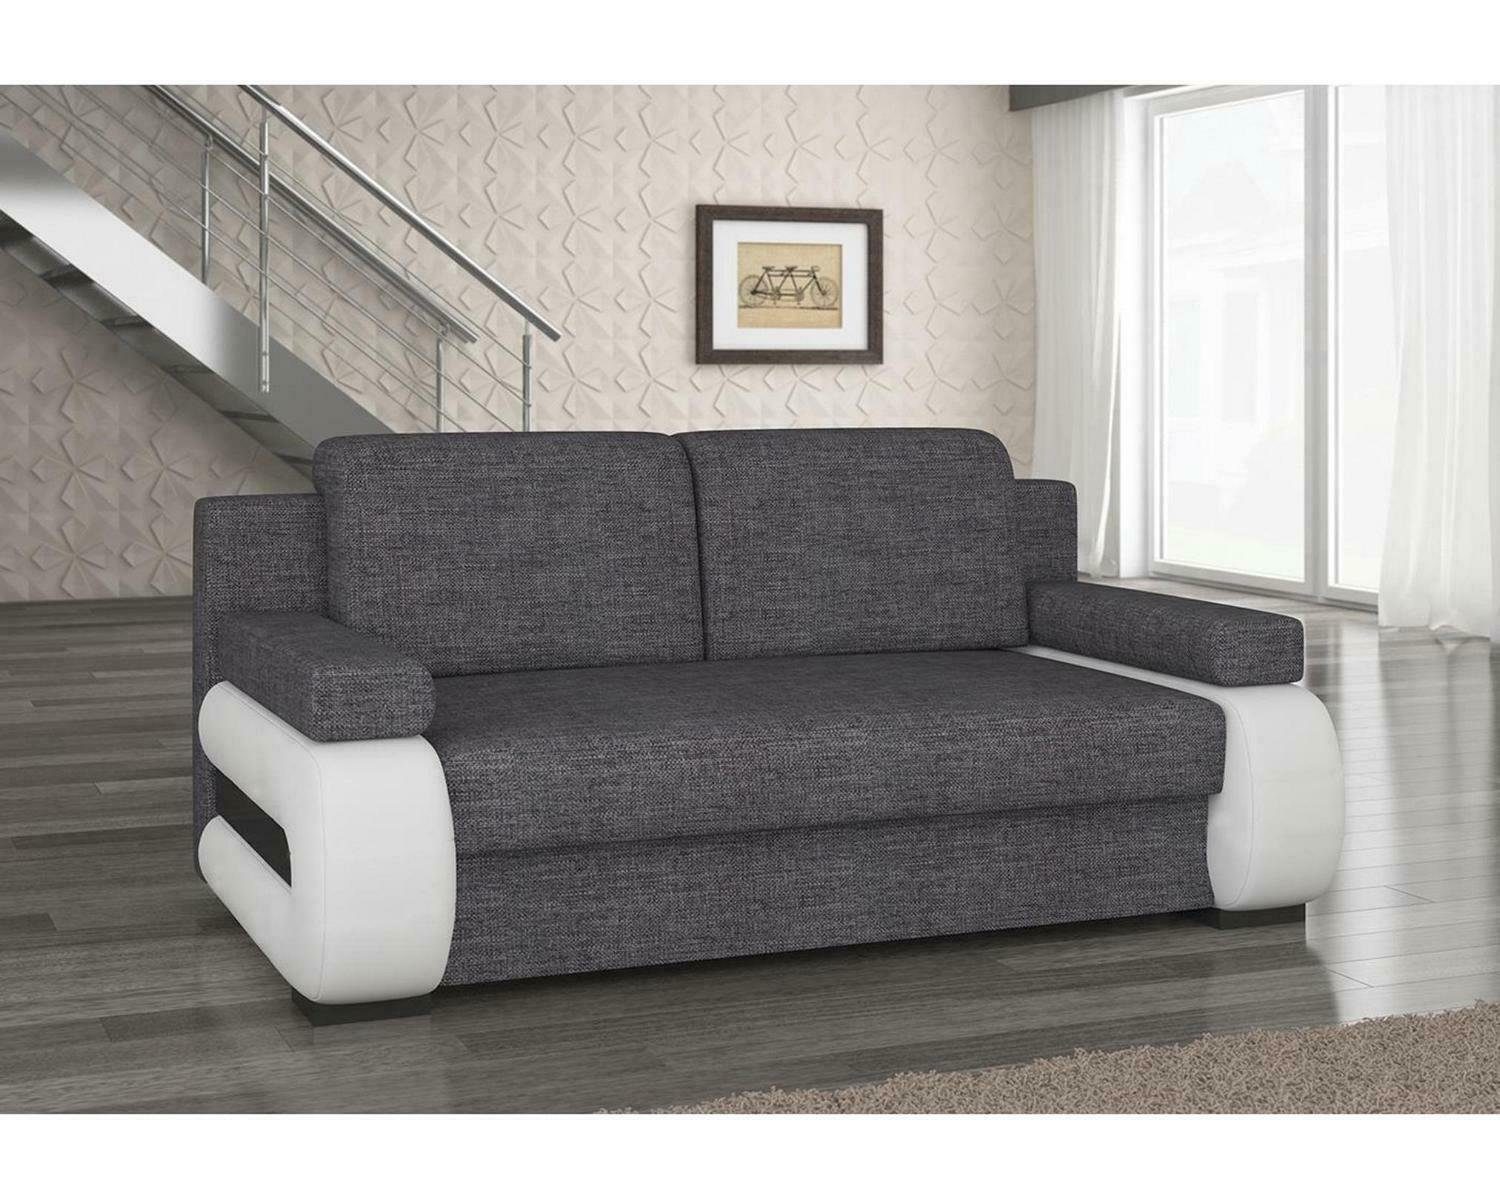 Textil Sofa 3-Sitzer in Stil Moderner Europe Brandneu, Grauer JVmoebel Polster Sofa Dreisitzer Made